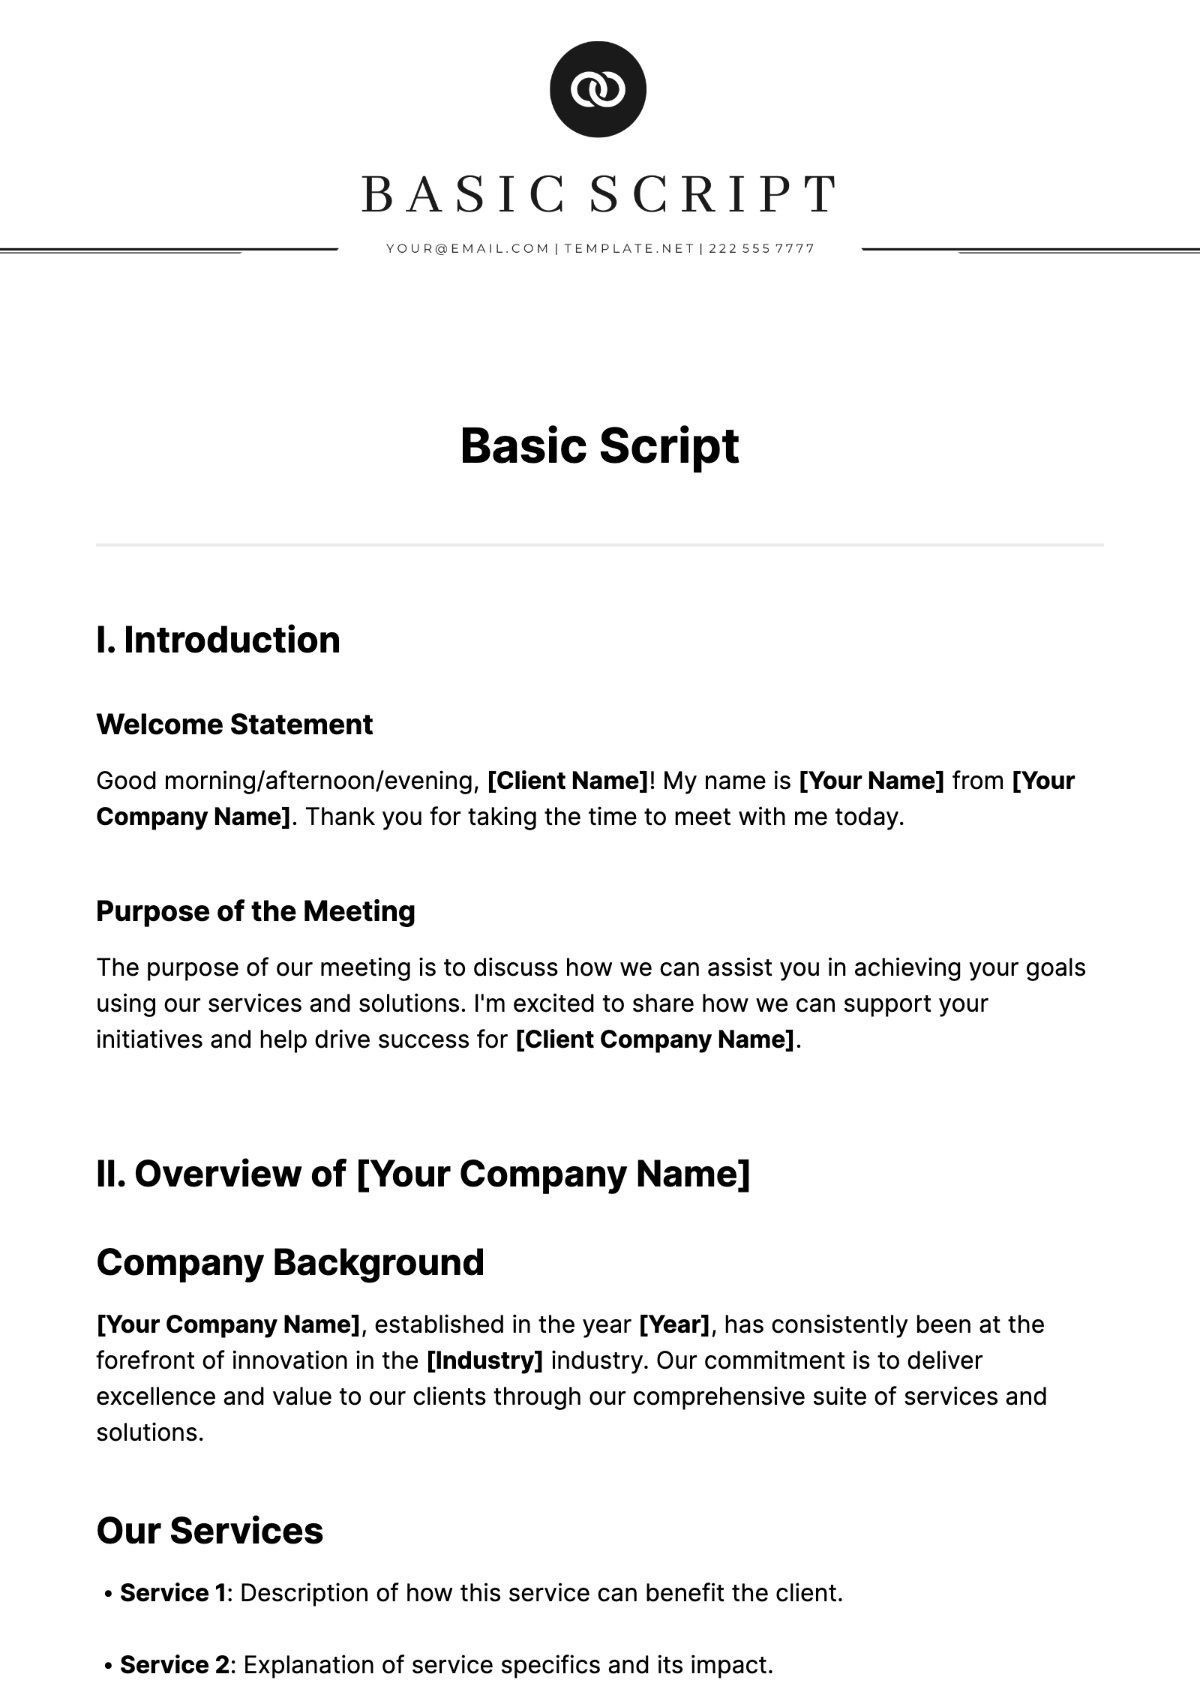 Basic Script Template